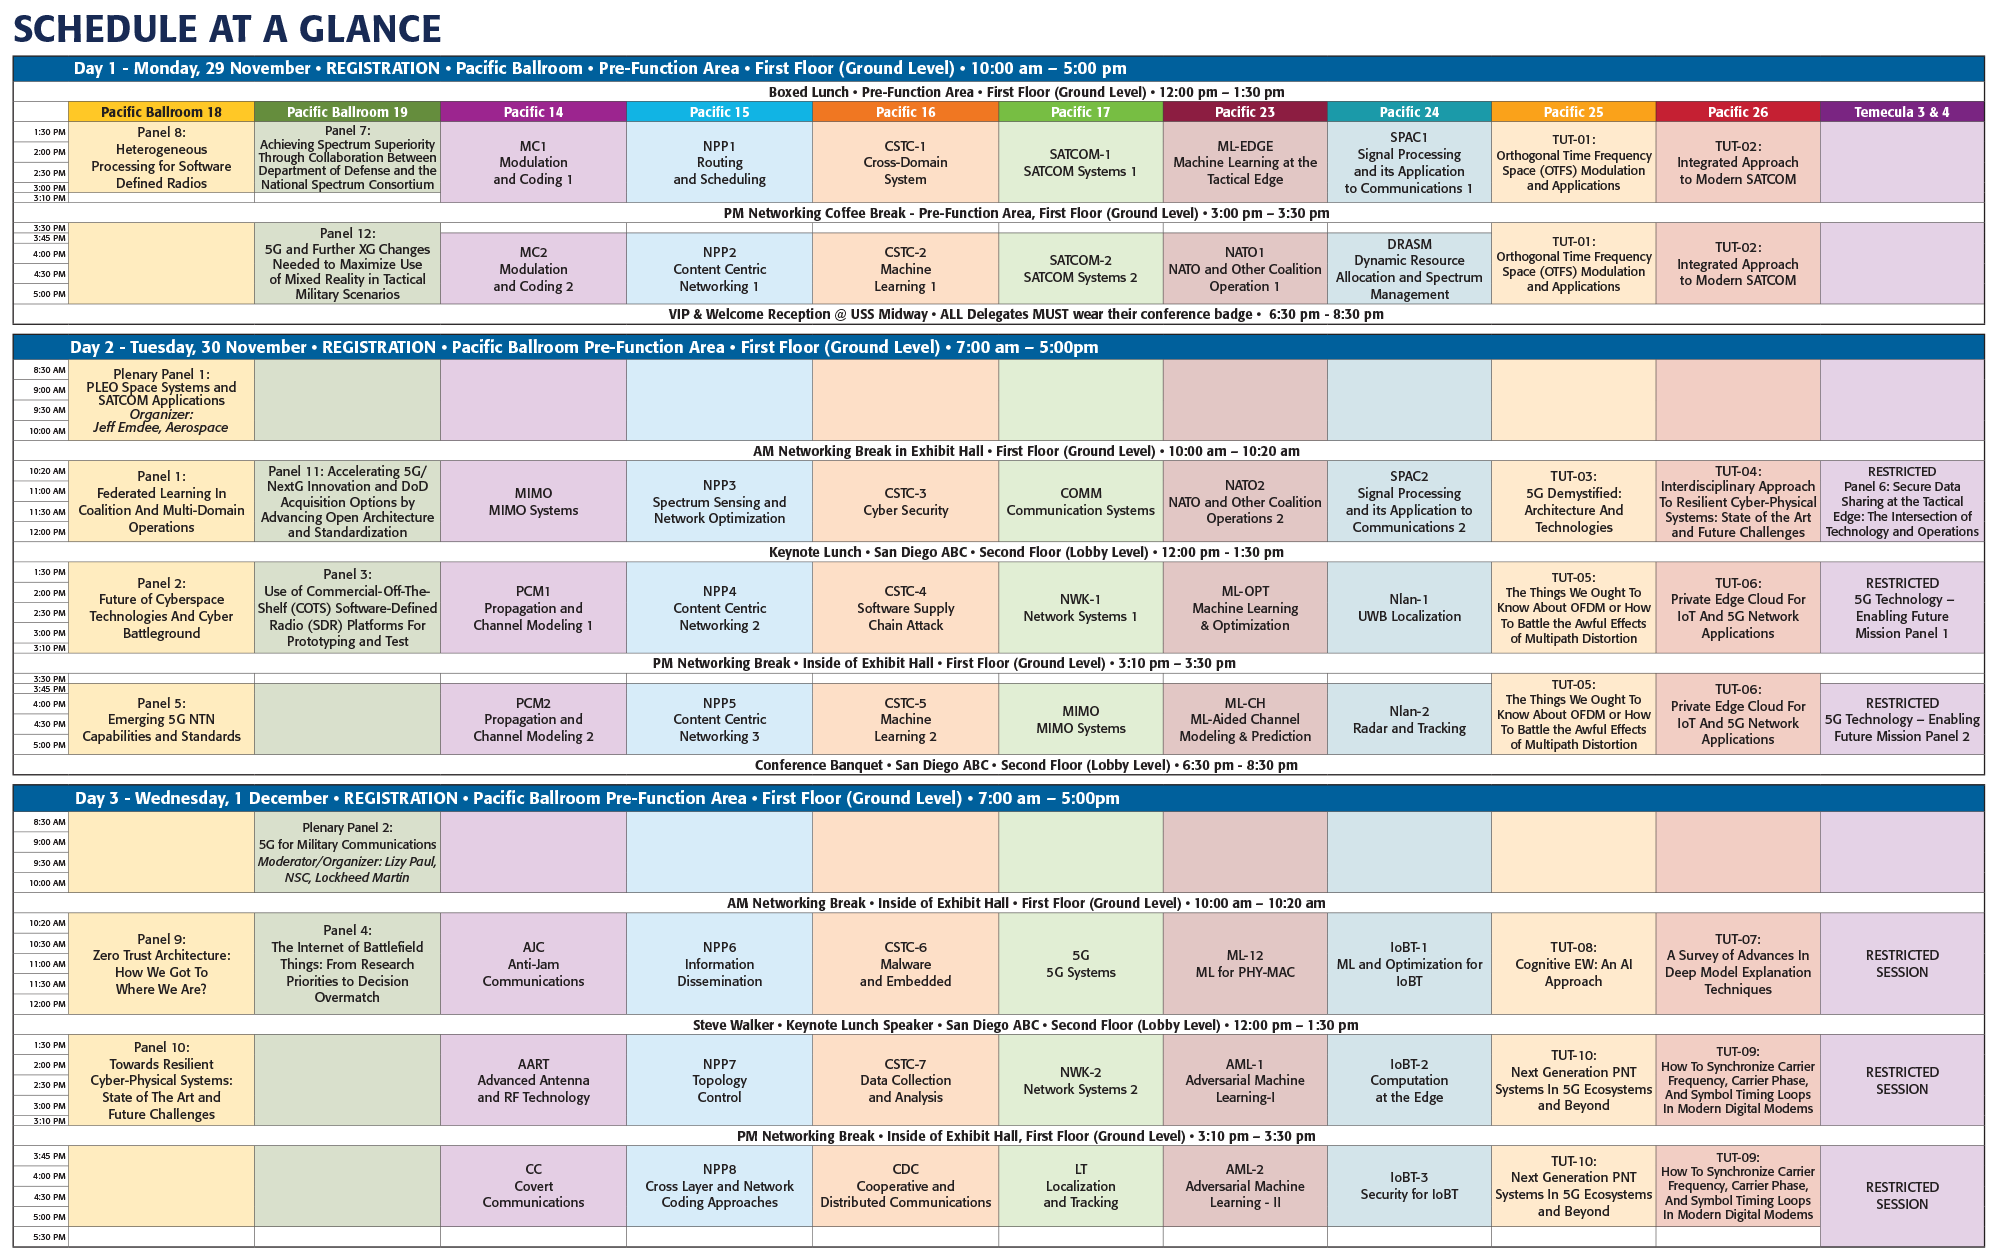 MILCOM 2021 Technical Program Schedule at a Glance